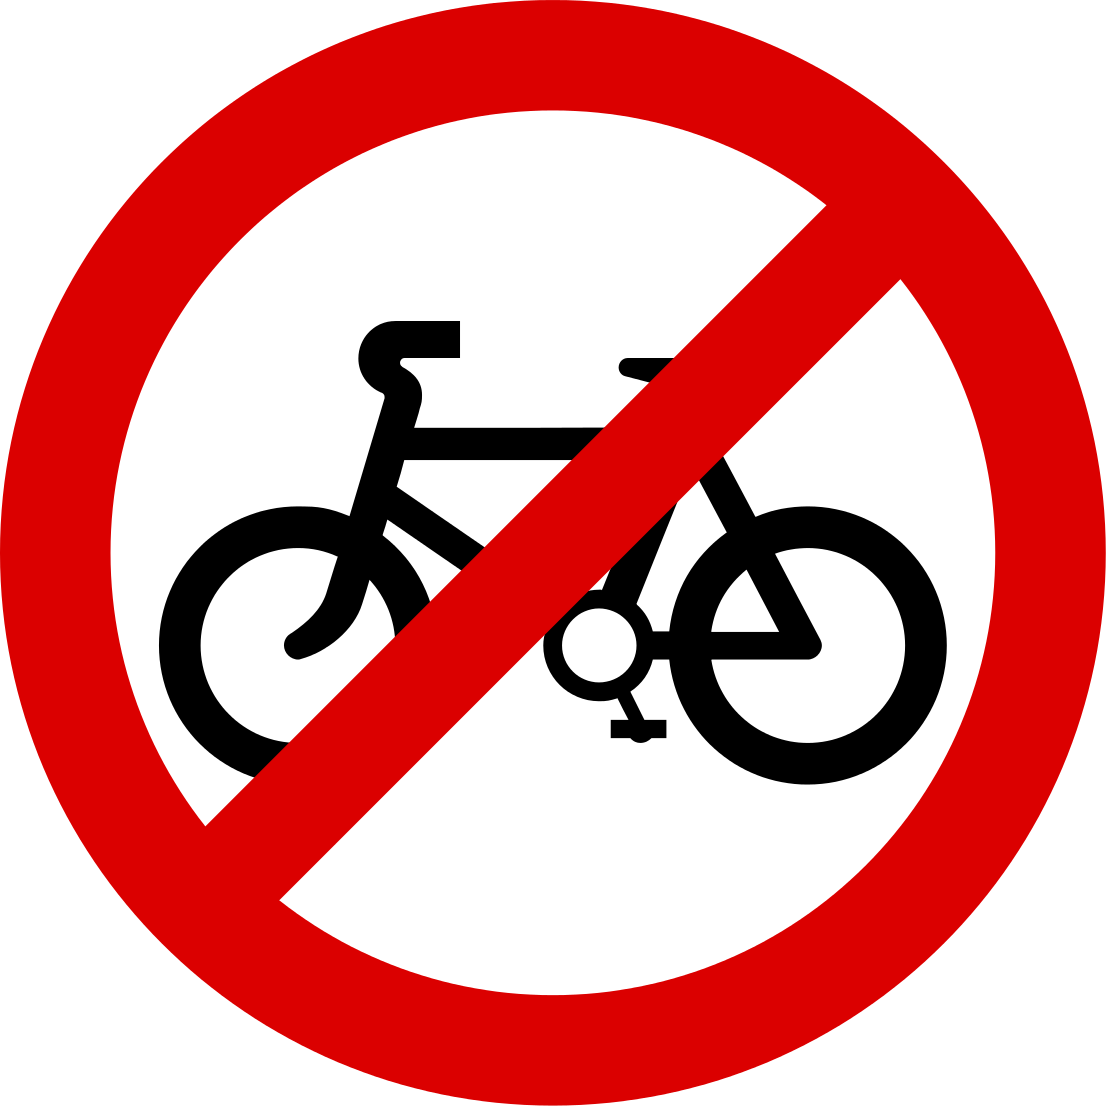 No pedal cycles